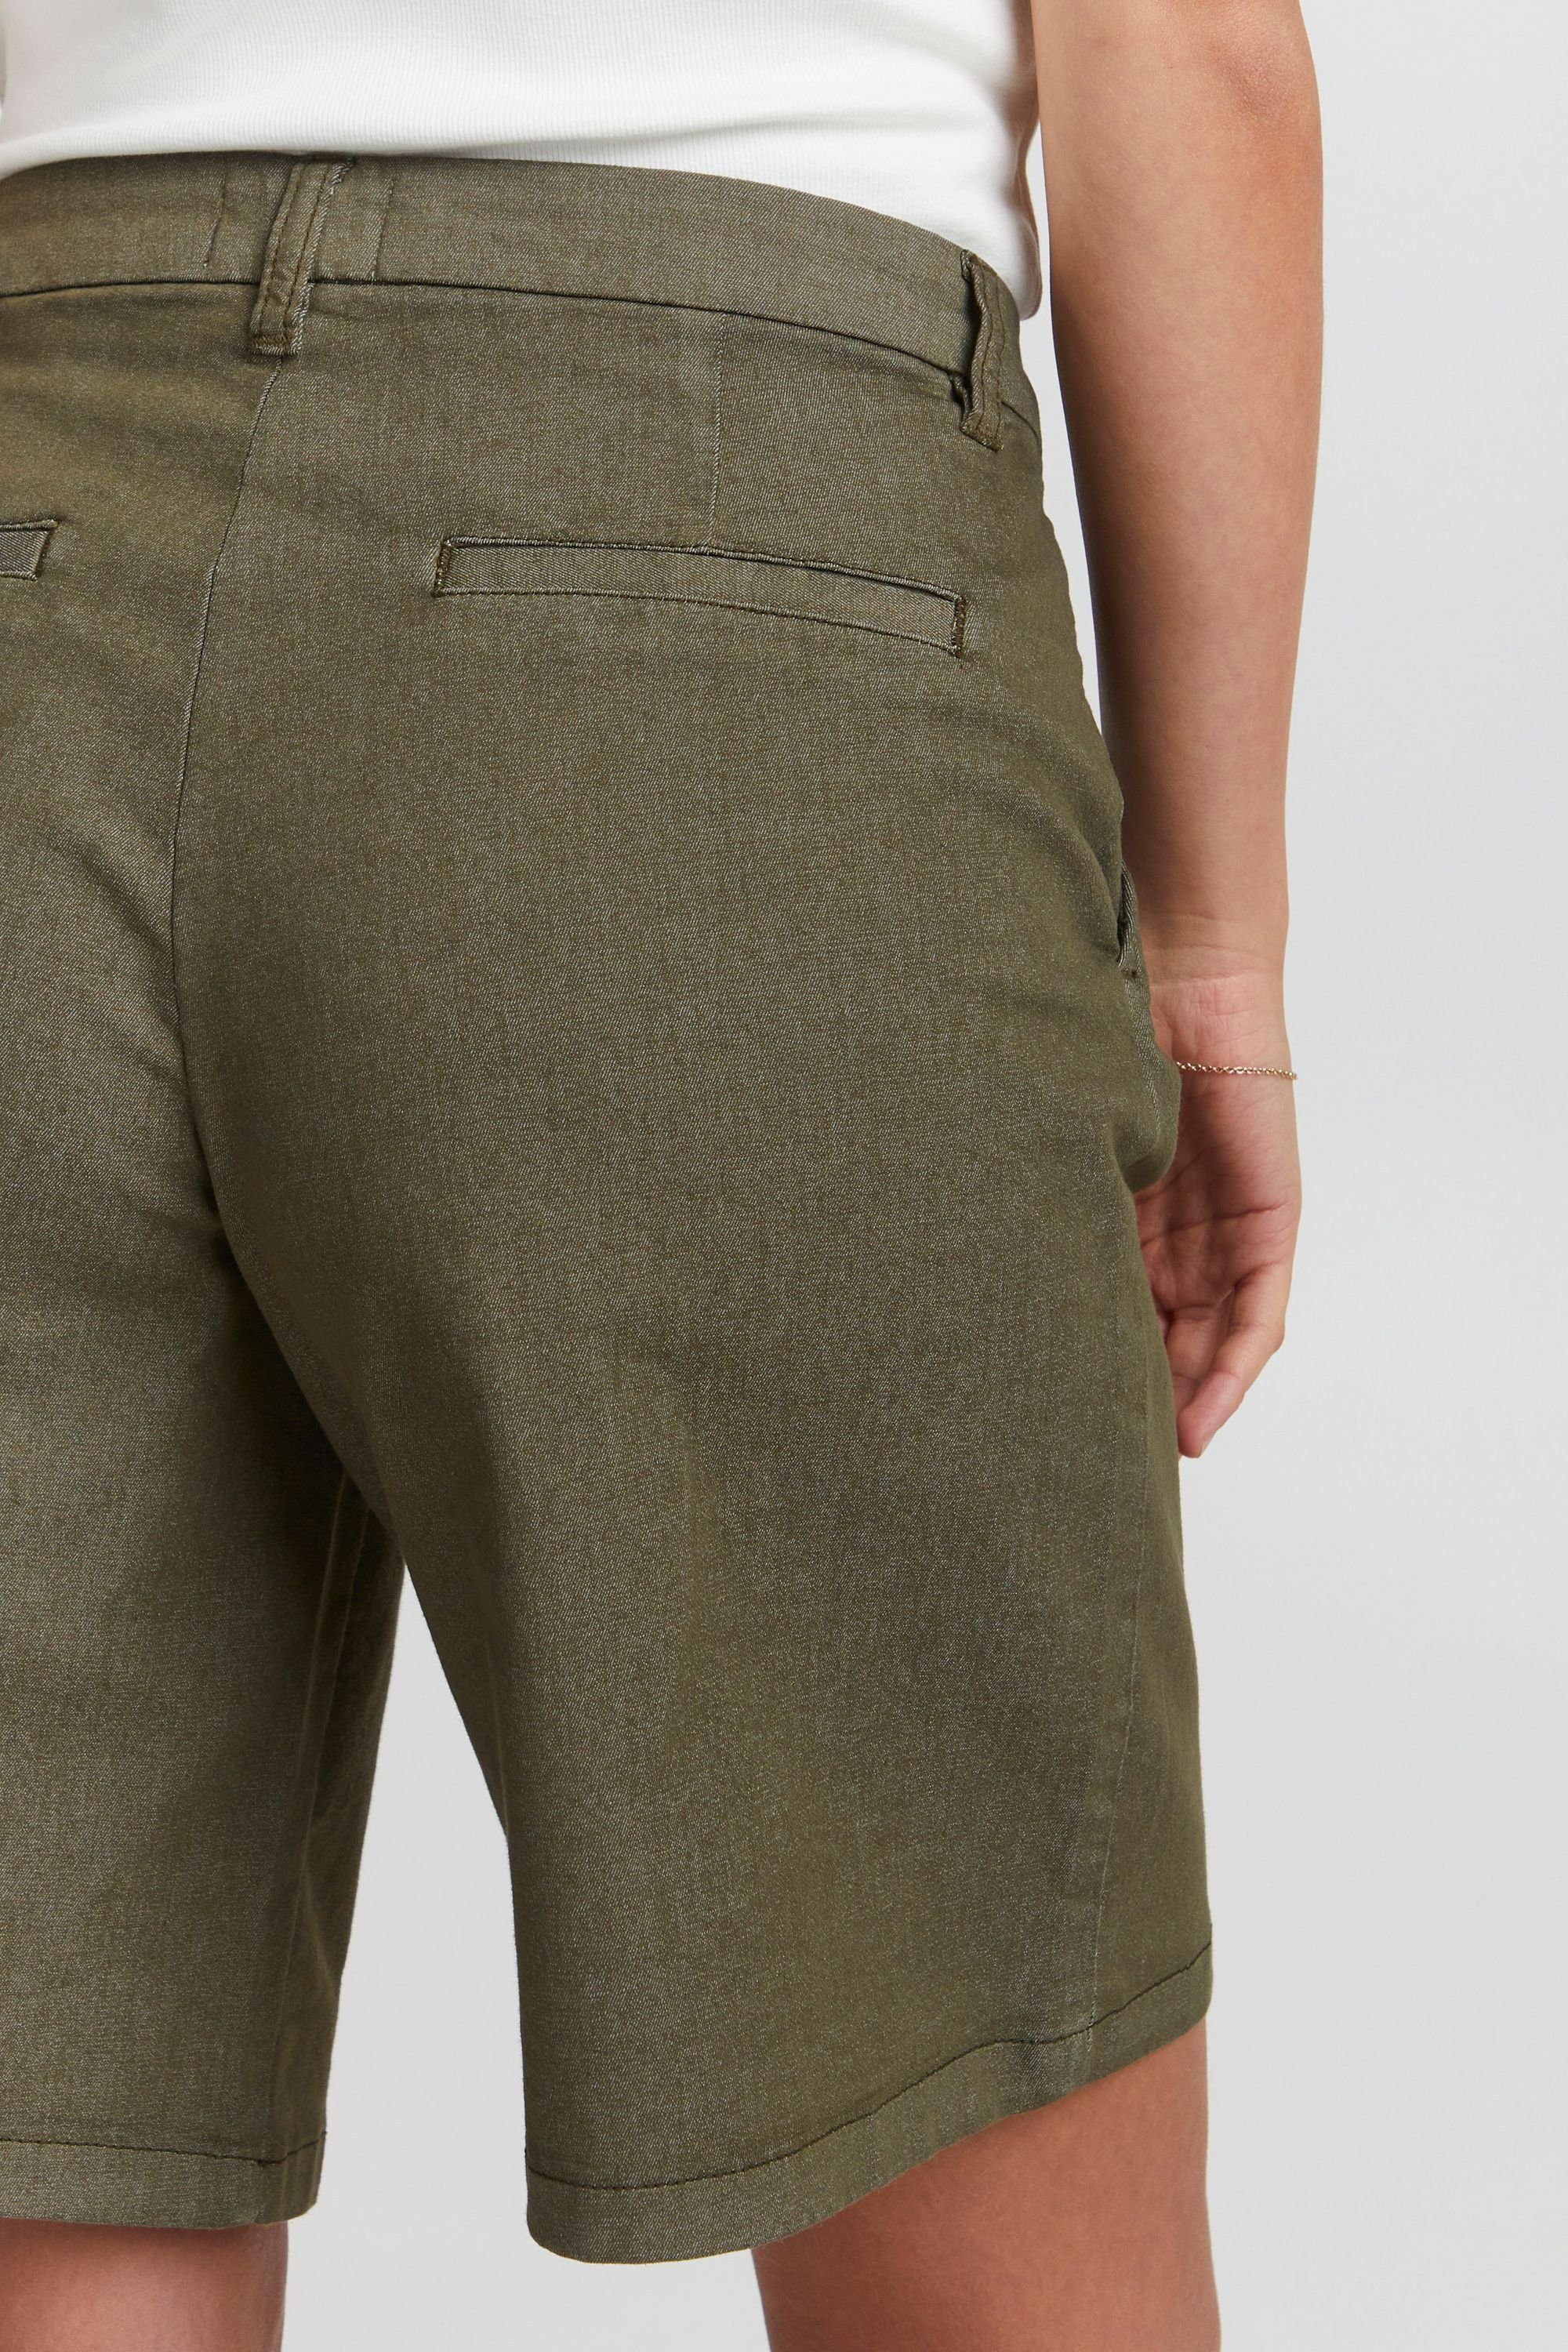 Pulz Jeans Shorts PZROSITA - Kalamata (190510) 50206530